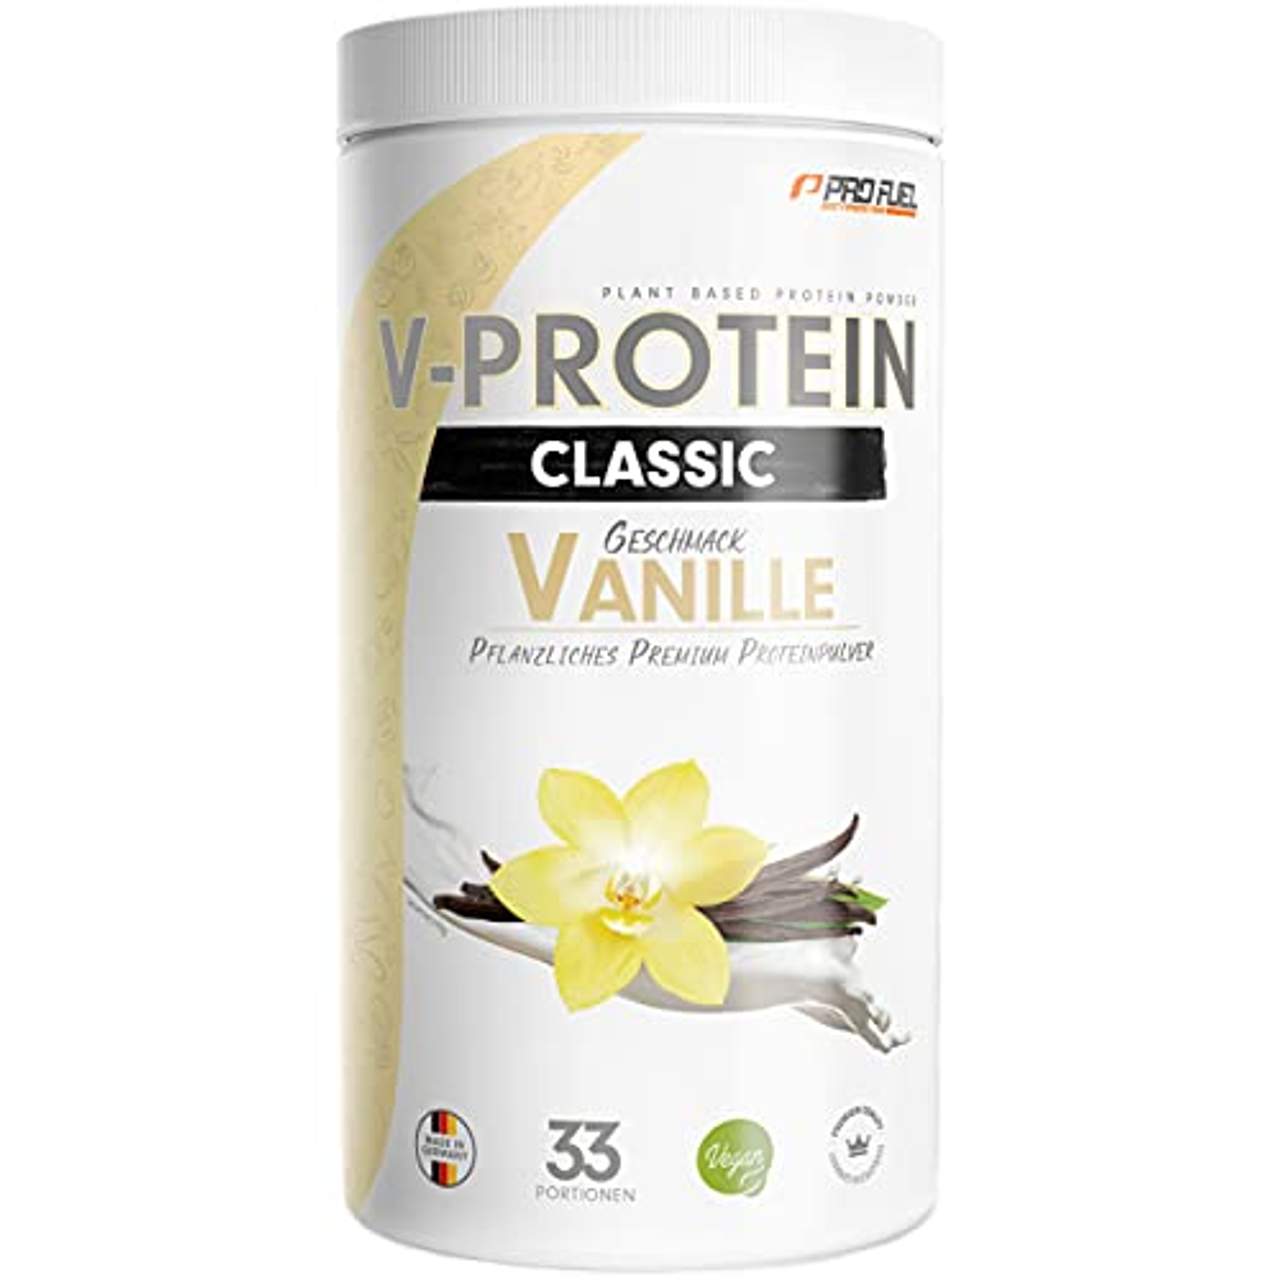 ProFuel Vegan Protein Pulver